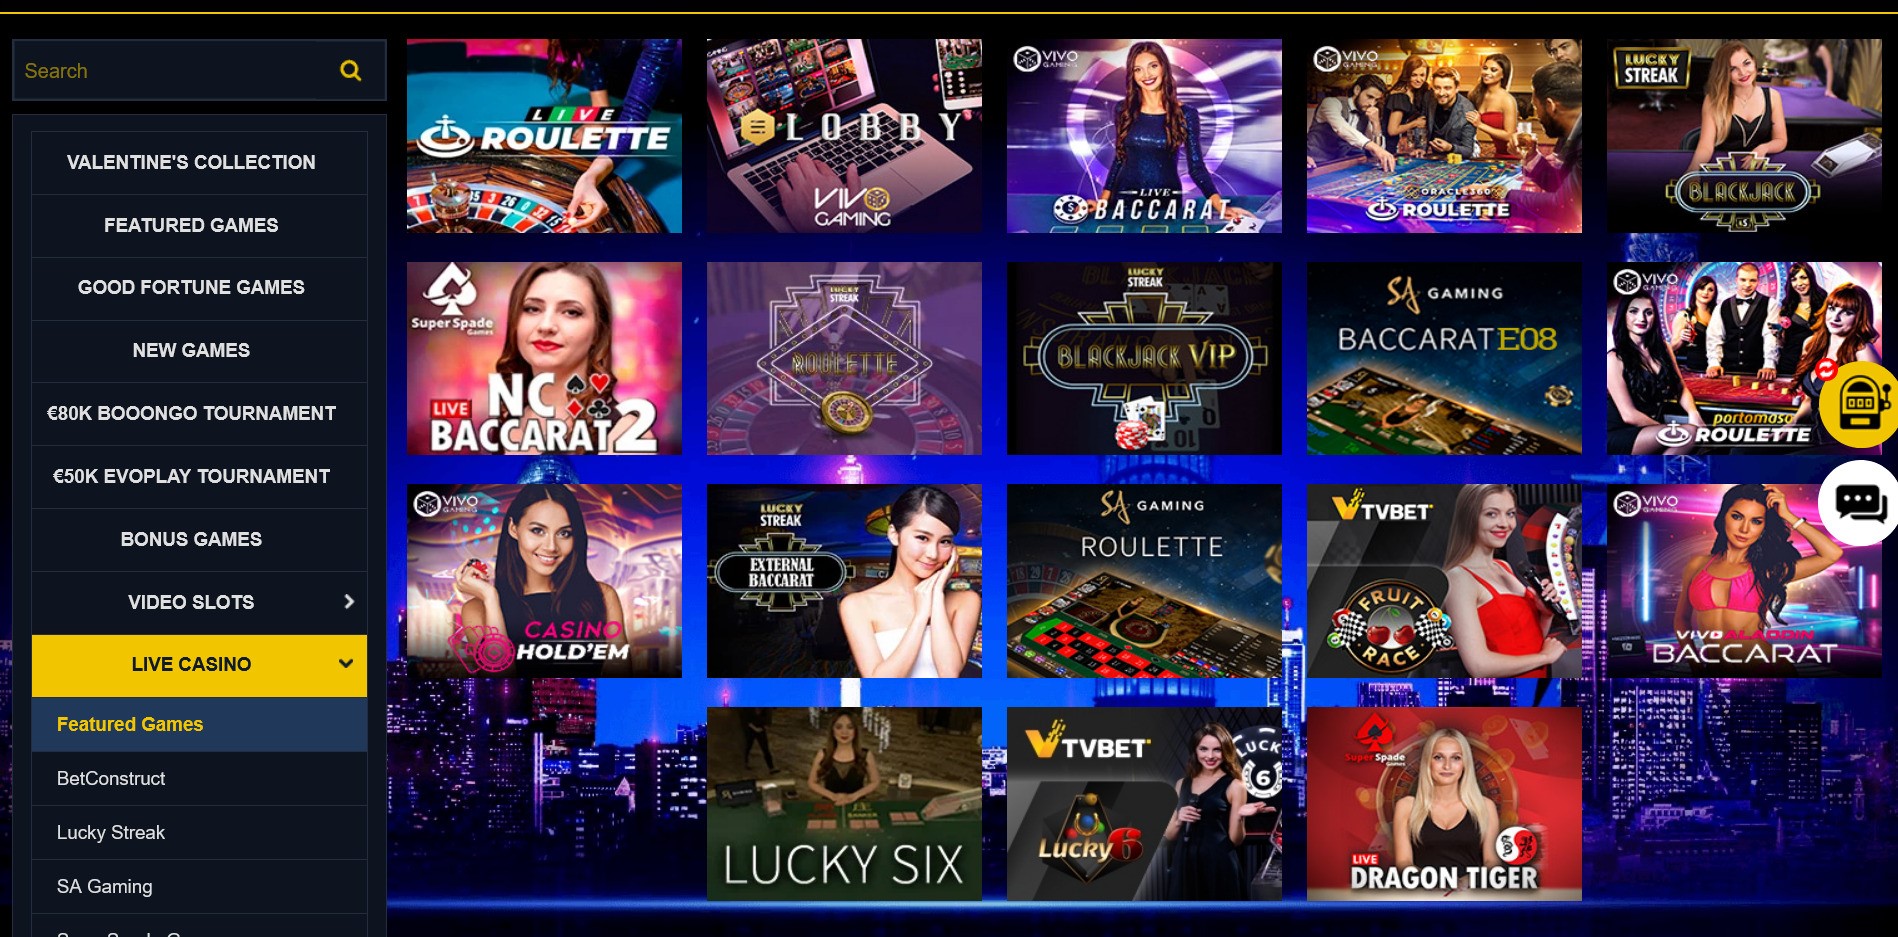 Euromoon Casino Live Dealer Games